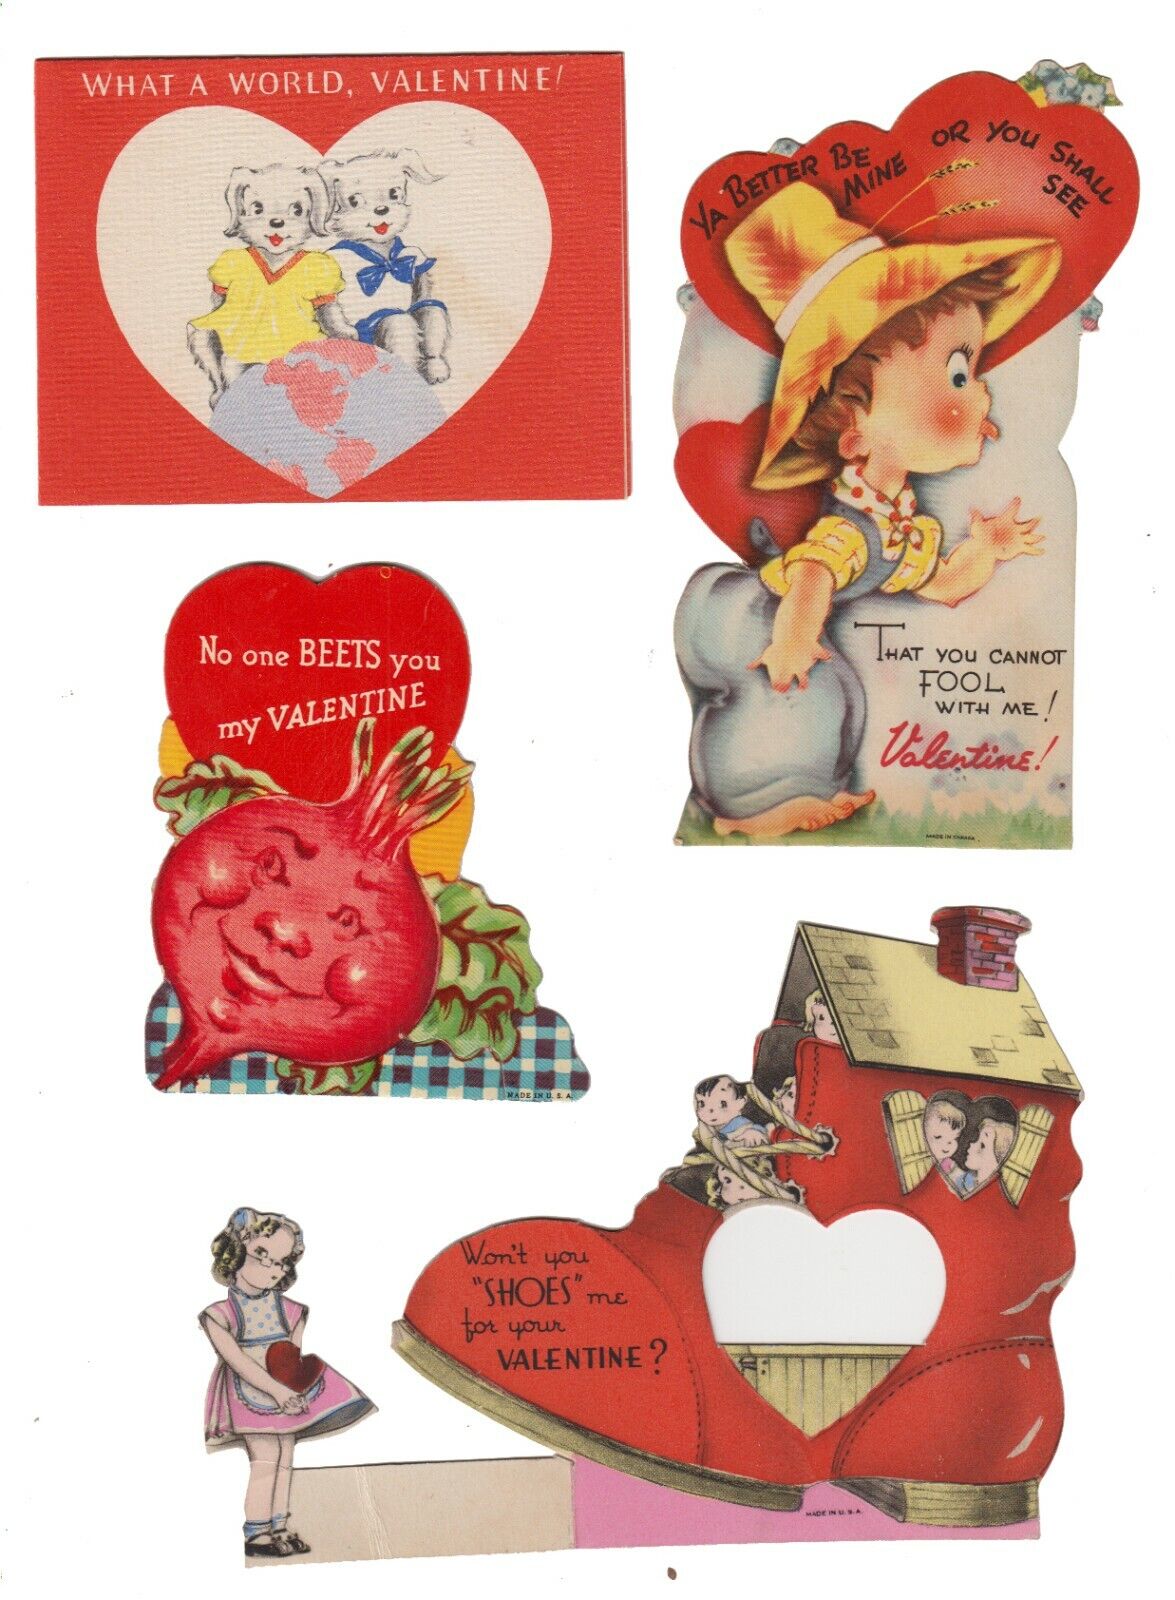 Fun Vintage Valentine Lot of 4 Children\'s Valentine\'s Day Cards ~ Dogs Beet Shoe